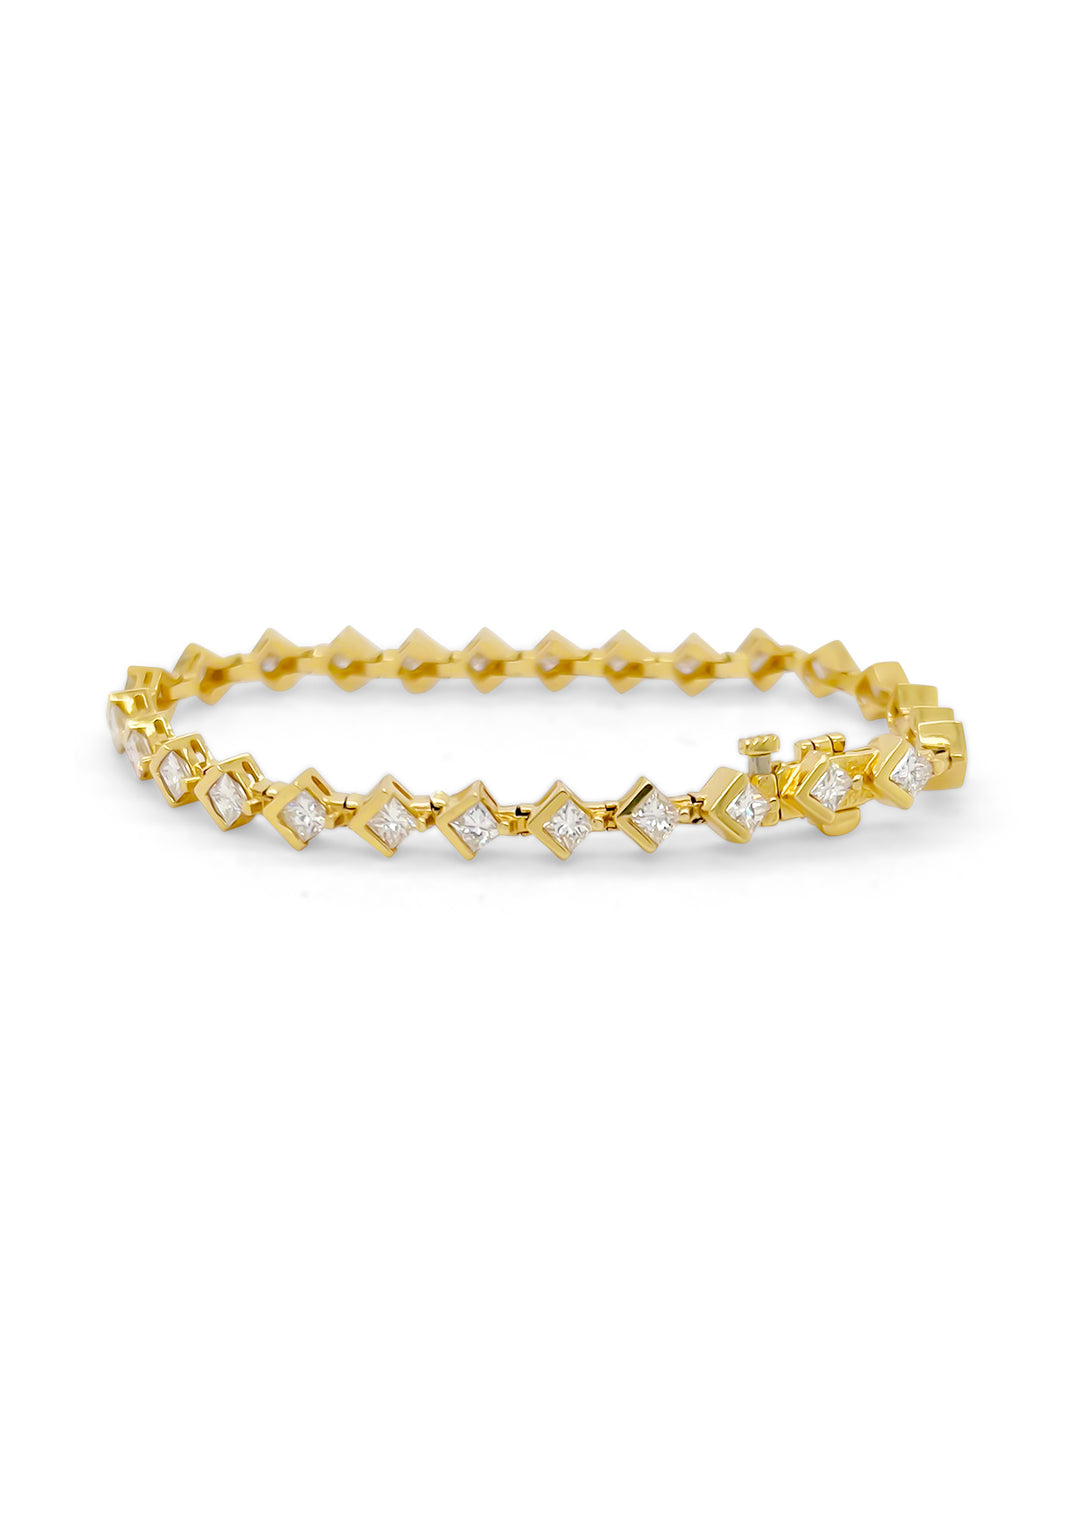 14K Yellow Gold 4.28 Carat Princess Cut Diamond Tennis Bracelet